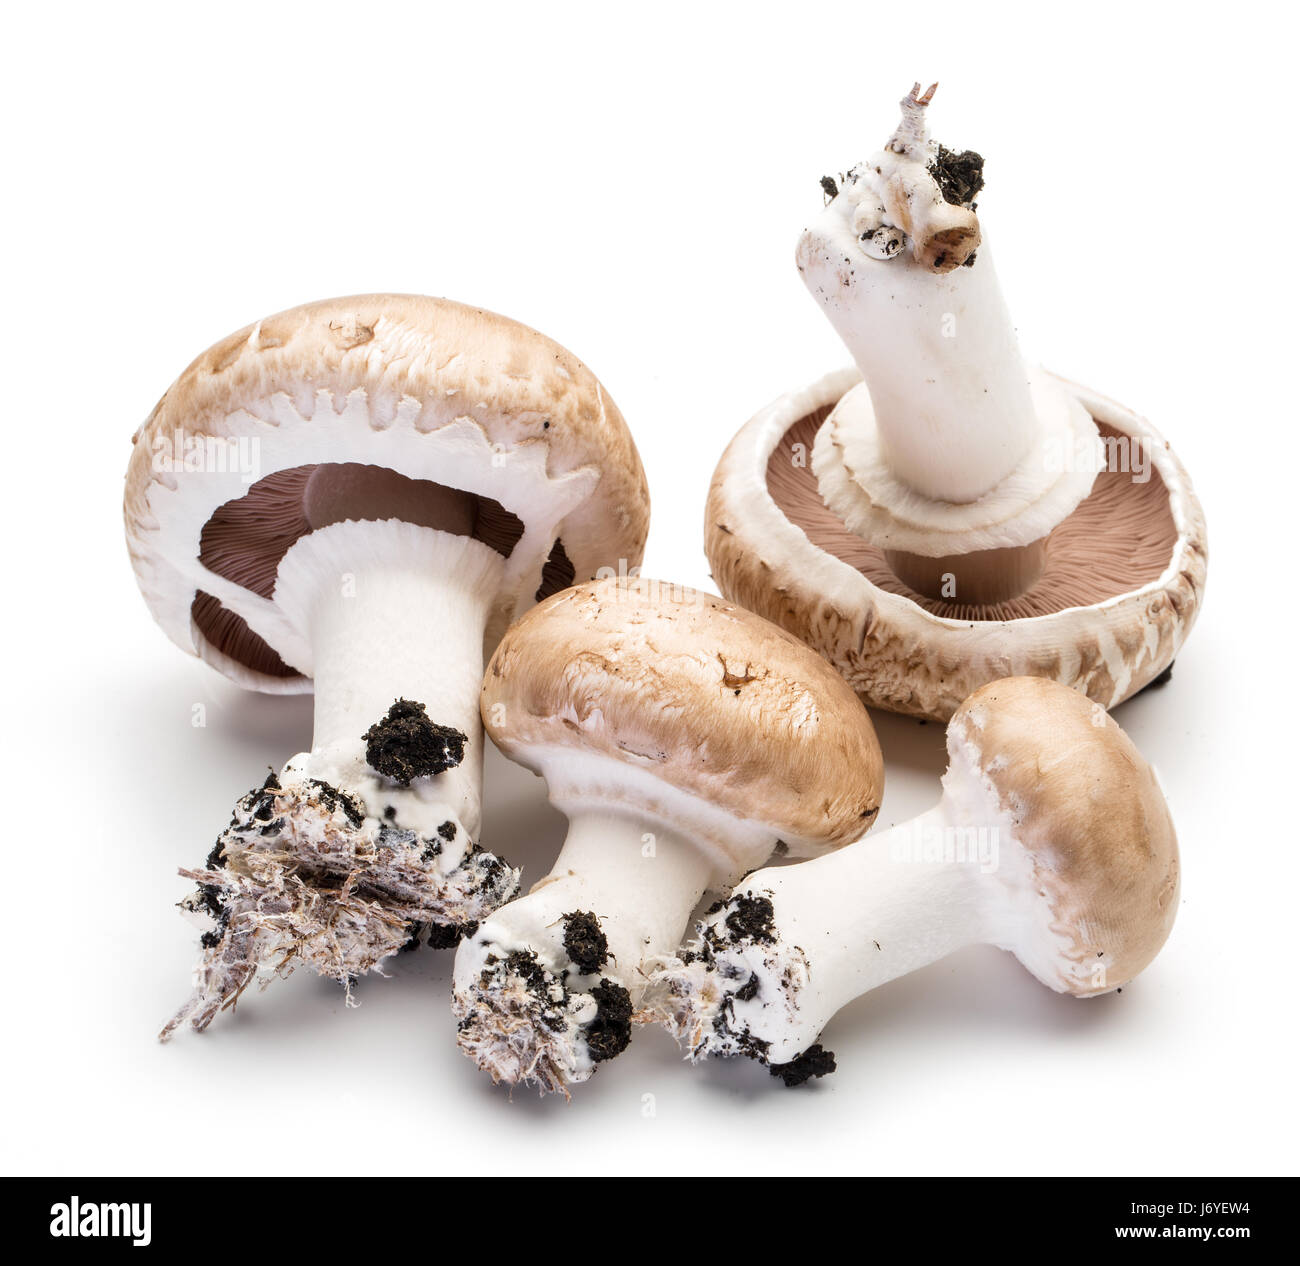 Champignon mushrooms on the white background. Stock Photo